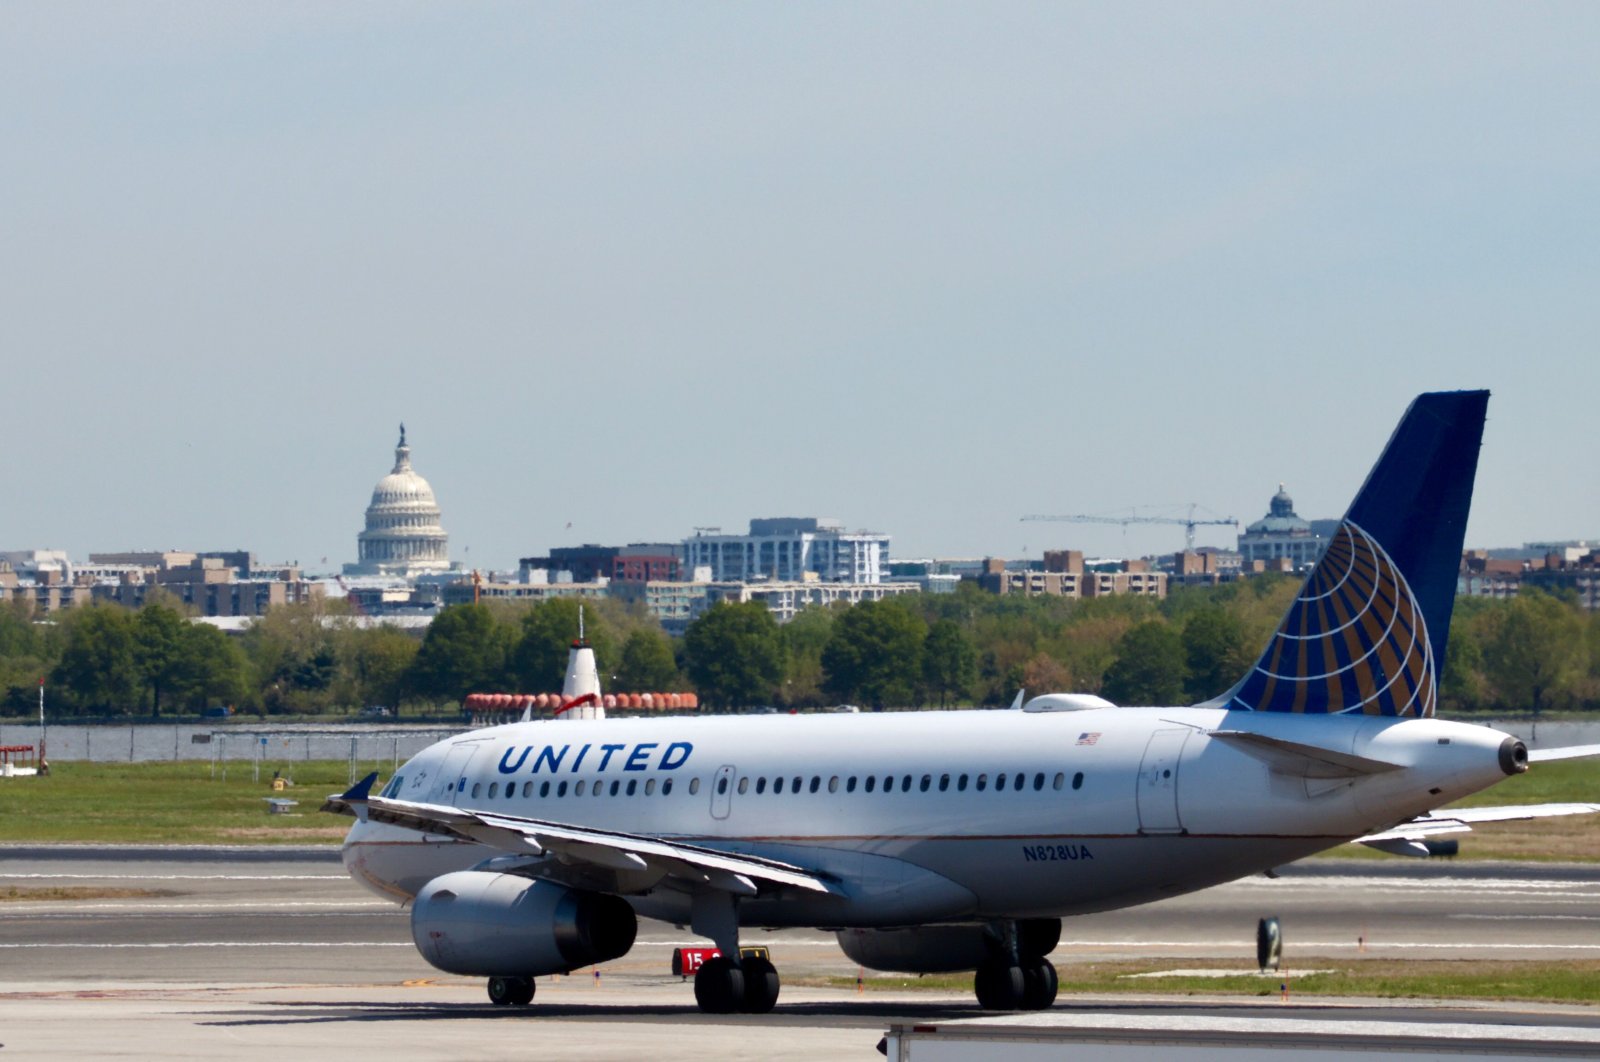 A United Airlines Airbus A319-100 taxis at Ronald Reagan Washington National Airport in Arlington, Virginia, April 23, 2019. (AFP Photo)